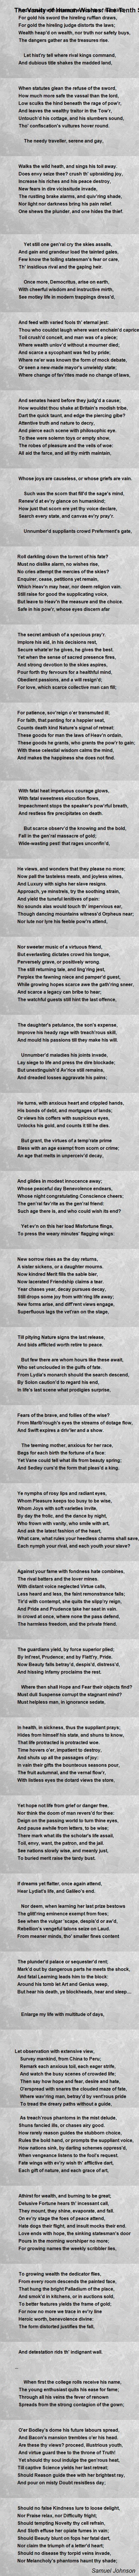 The Vanity Of Human Wishes Poem by Samuel Johnson - Poem ...
